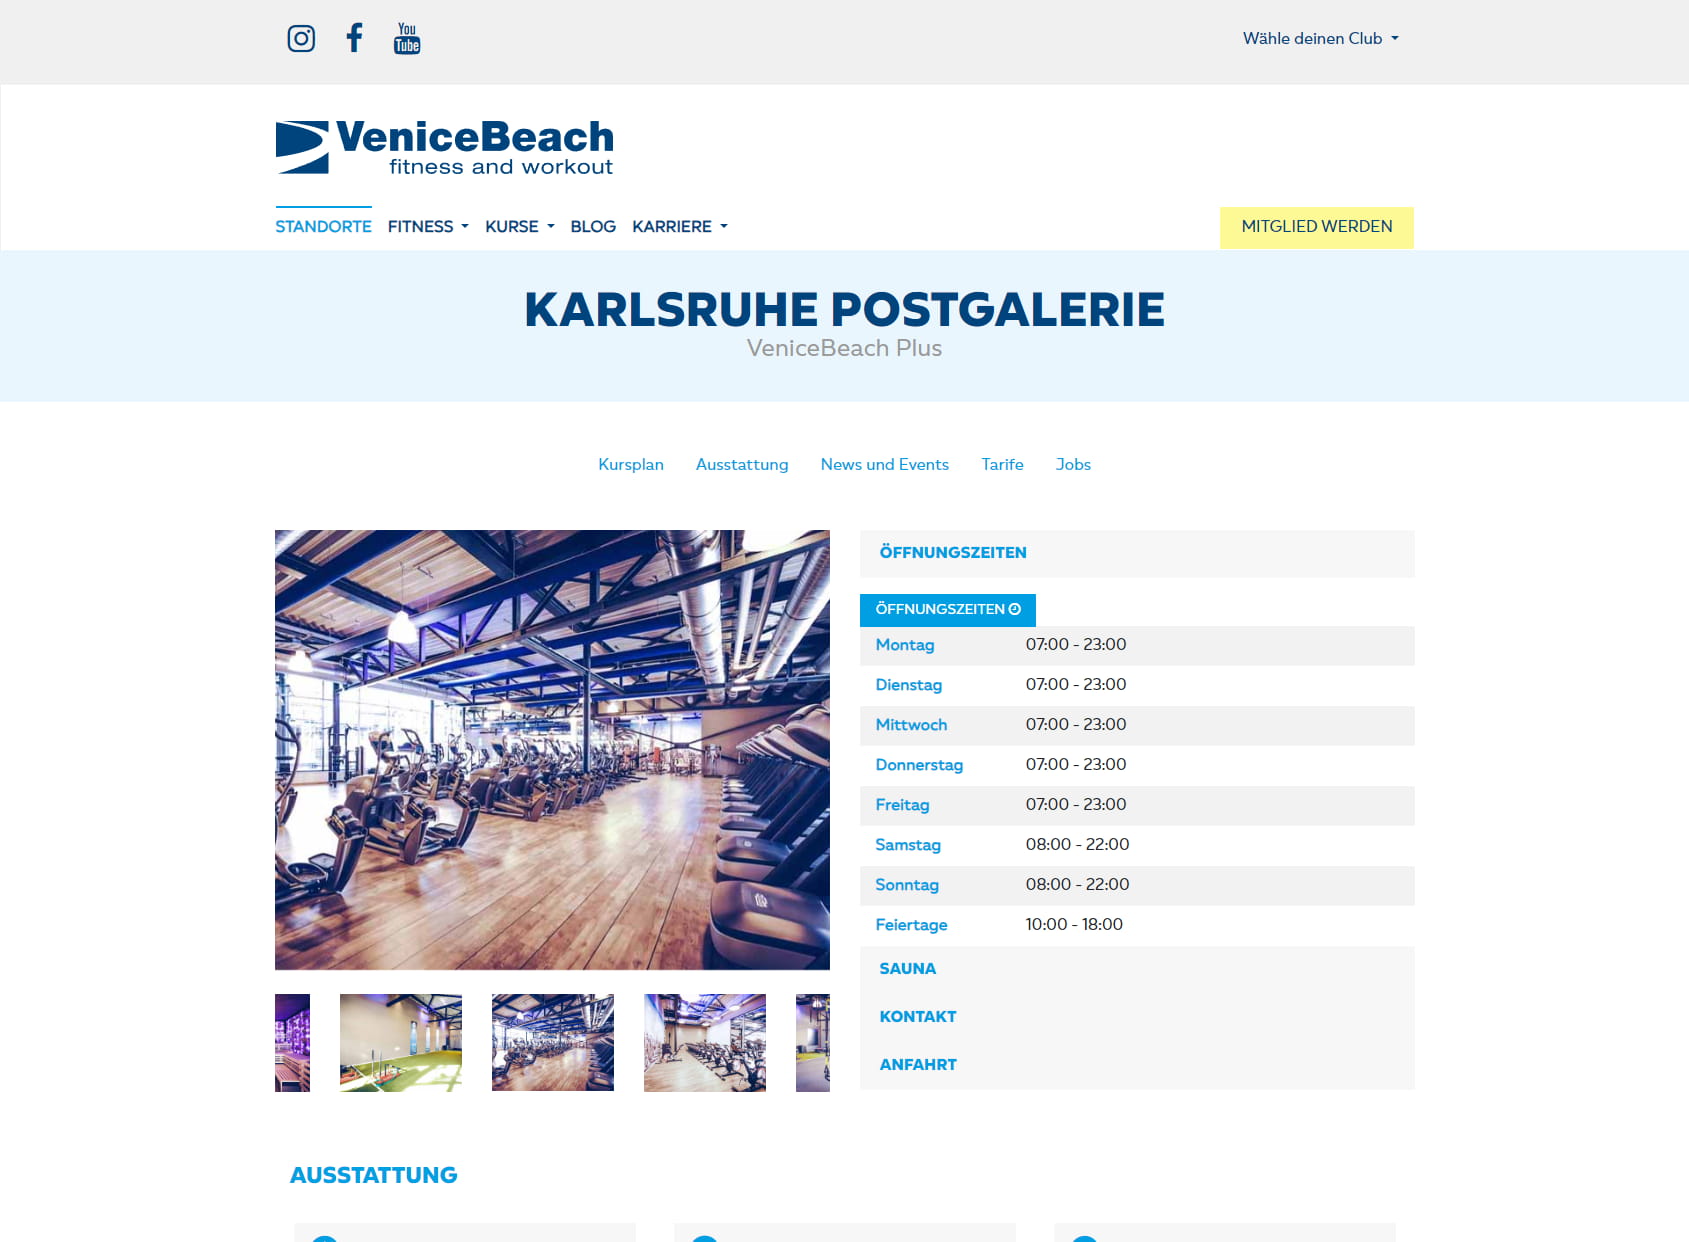 VeniceBeach Karlsruhe Postgalerie